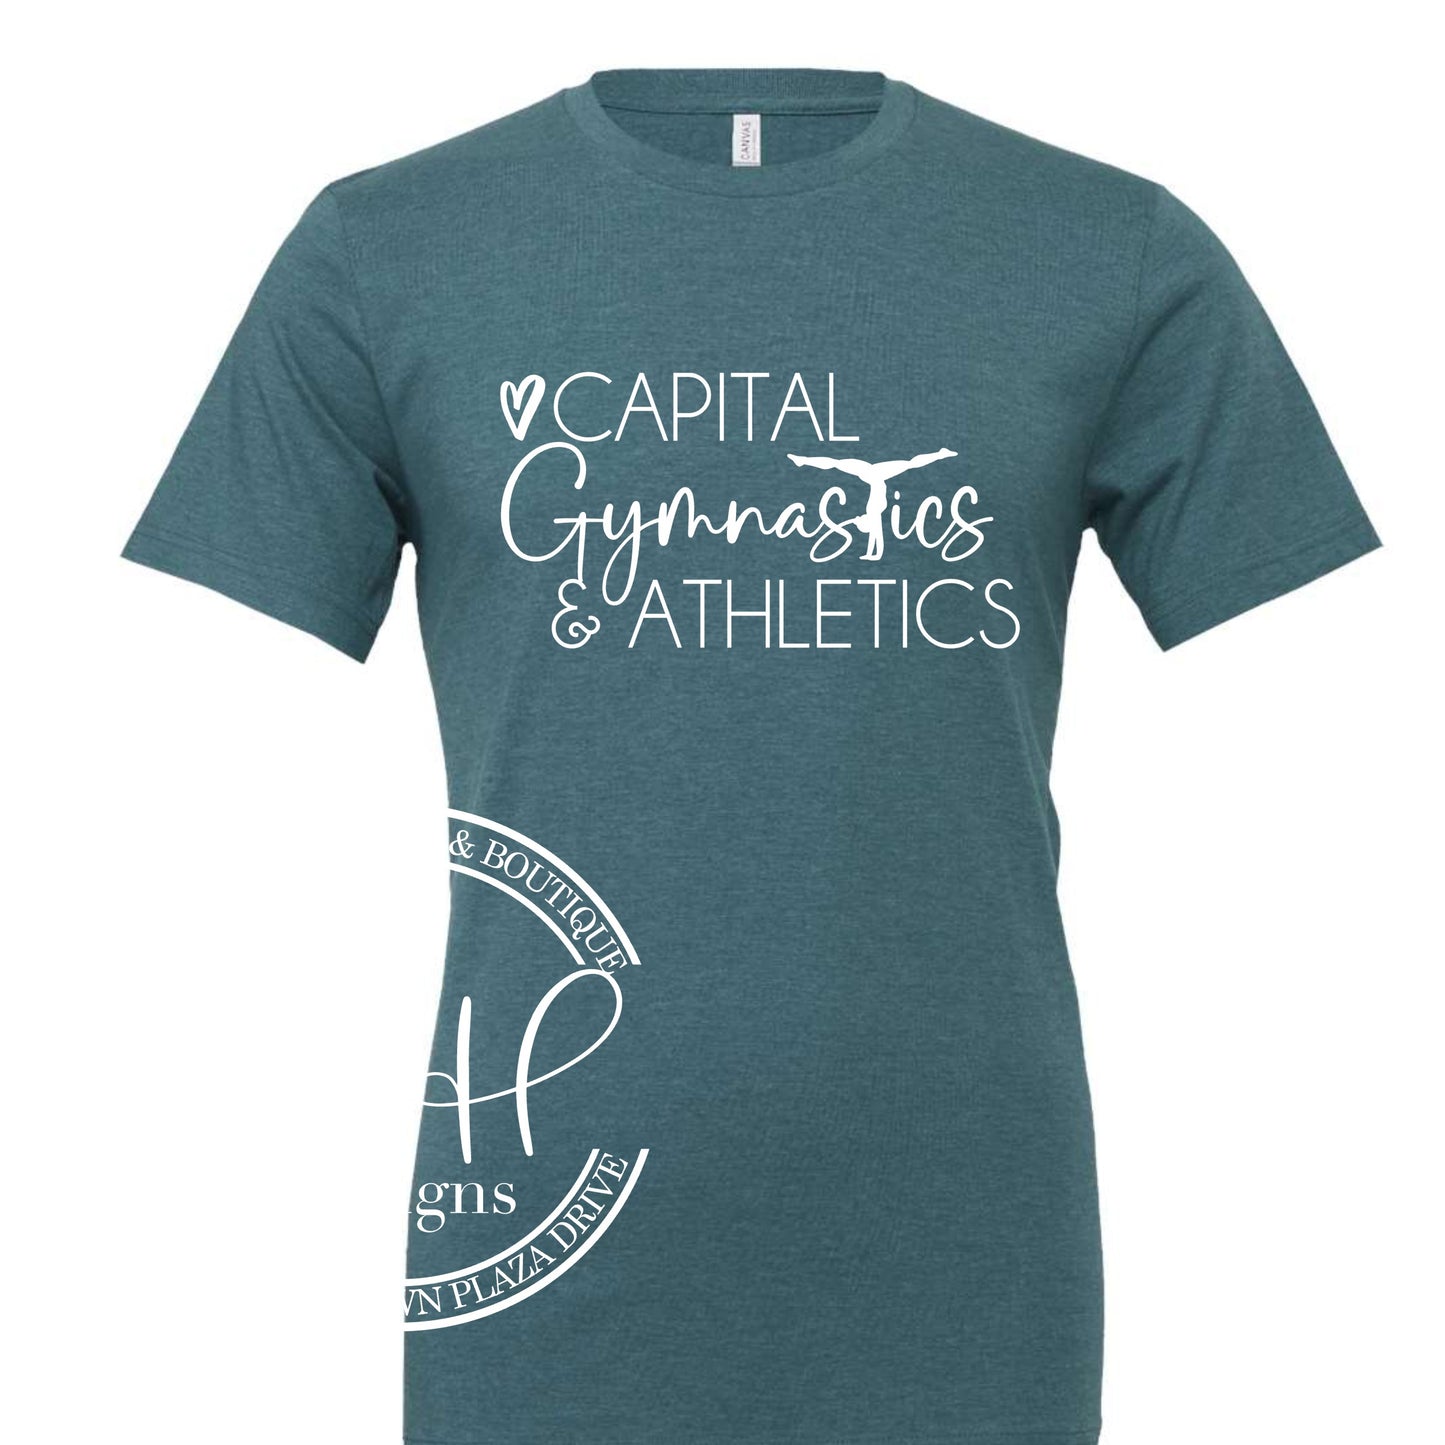 Capital Gymnastics & Athletics with Heart - CGA Booster Club - Closes 11/13